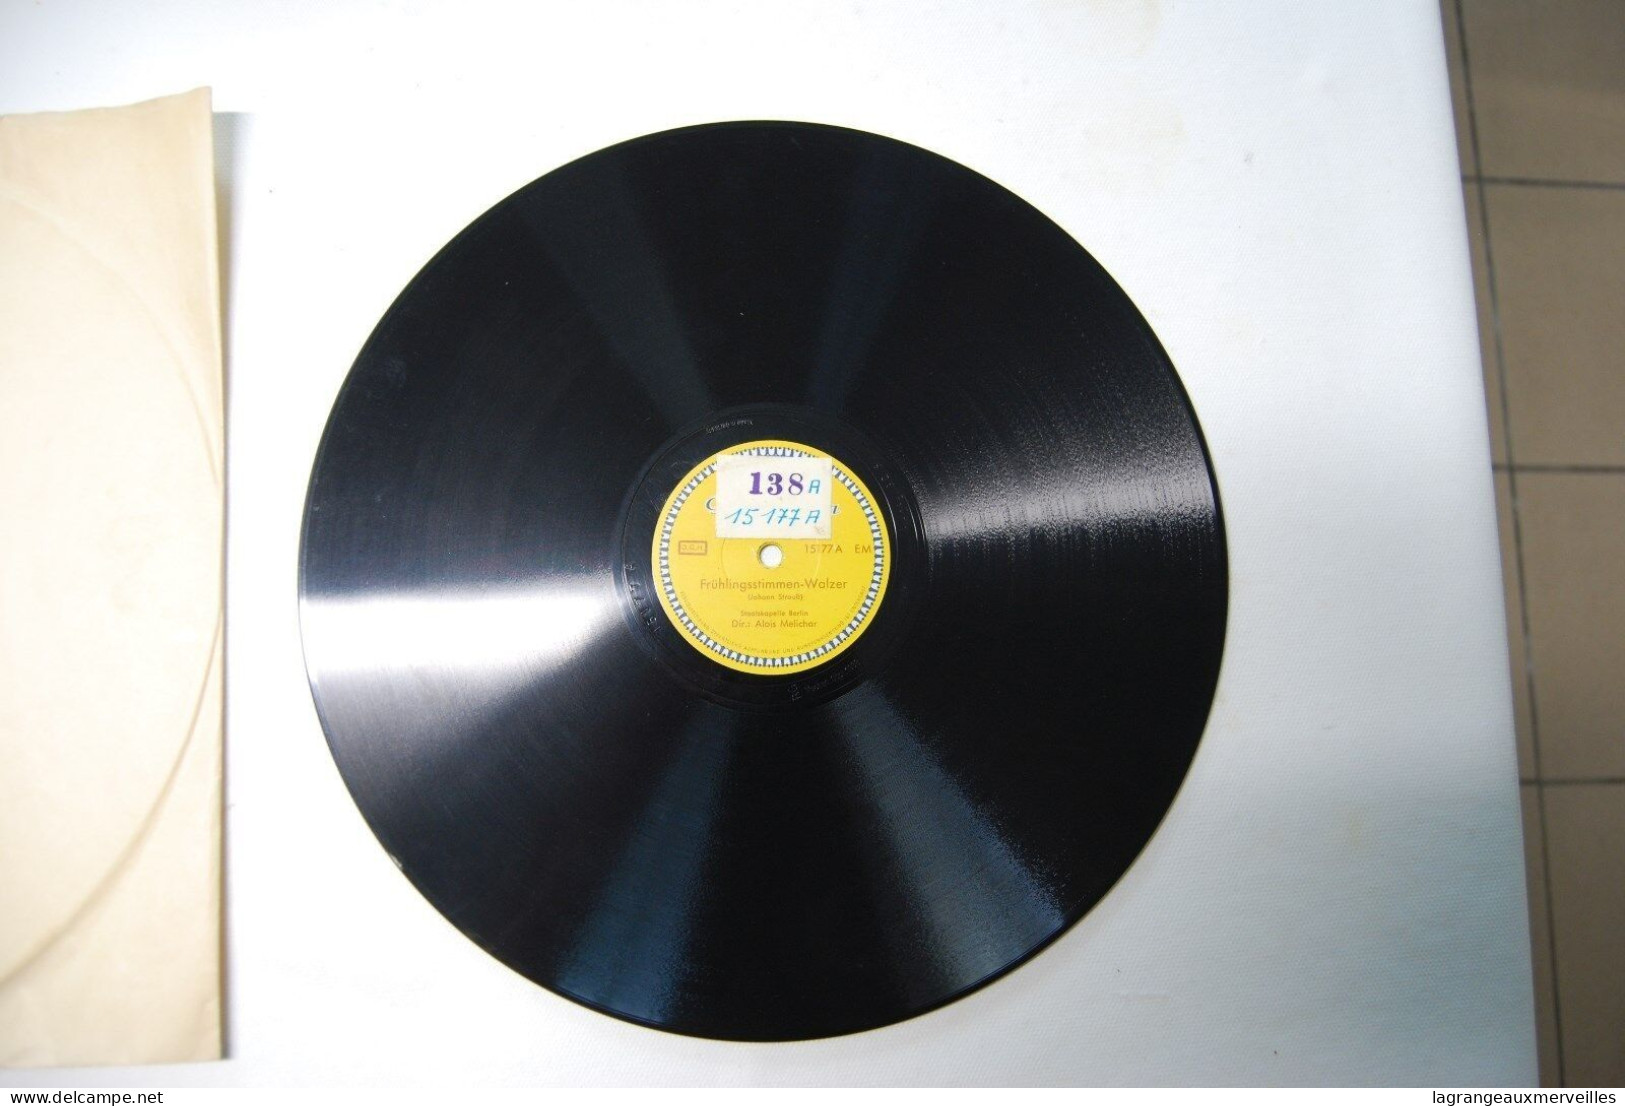 Di2 - Disque Deutche Gramofon - Walzer - 78 G - Dischi Per Fonografi